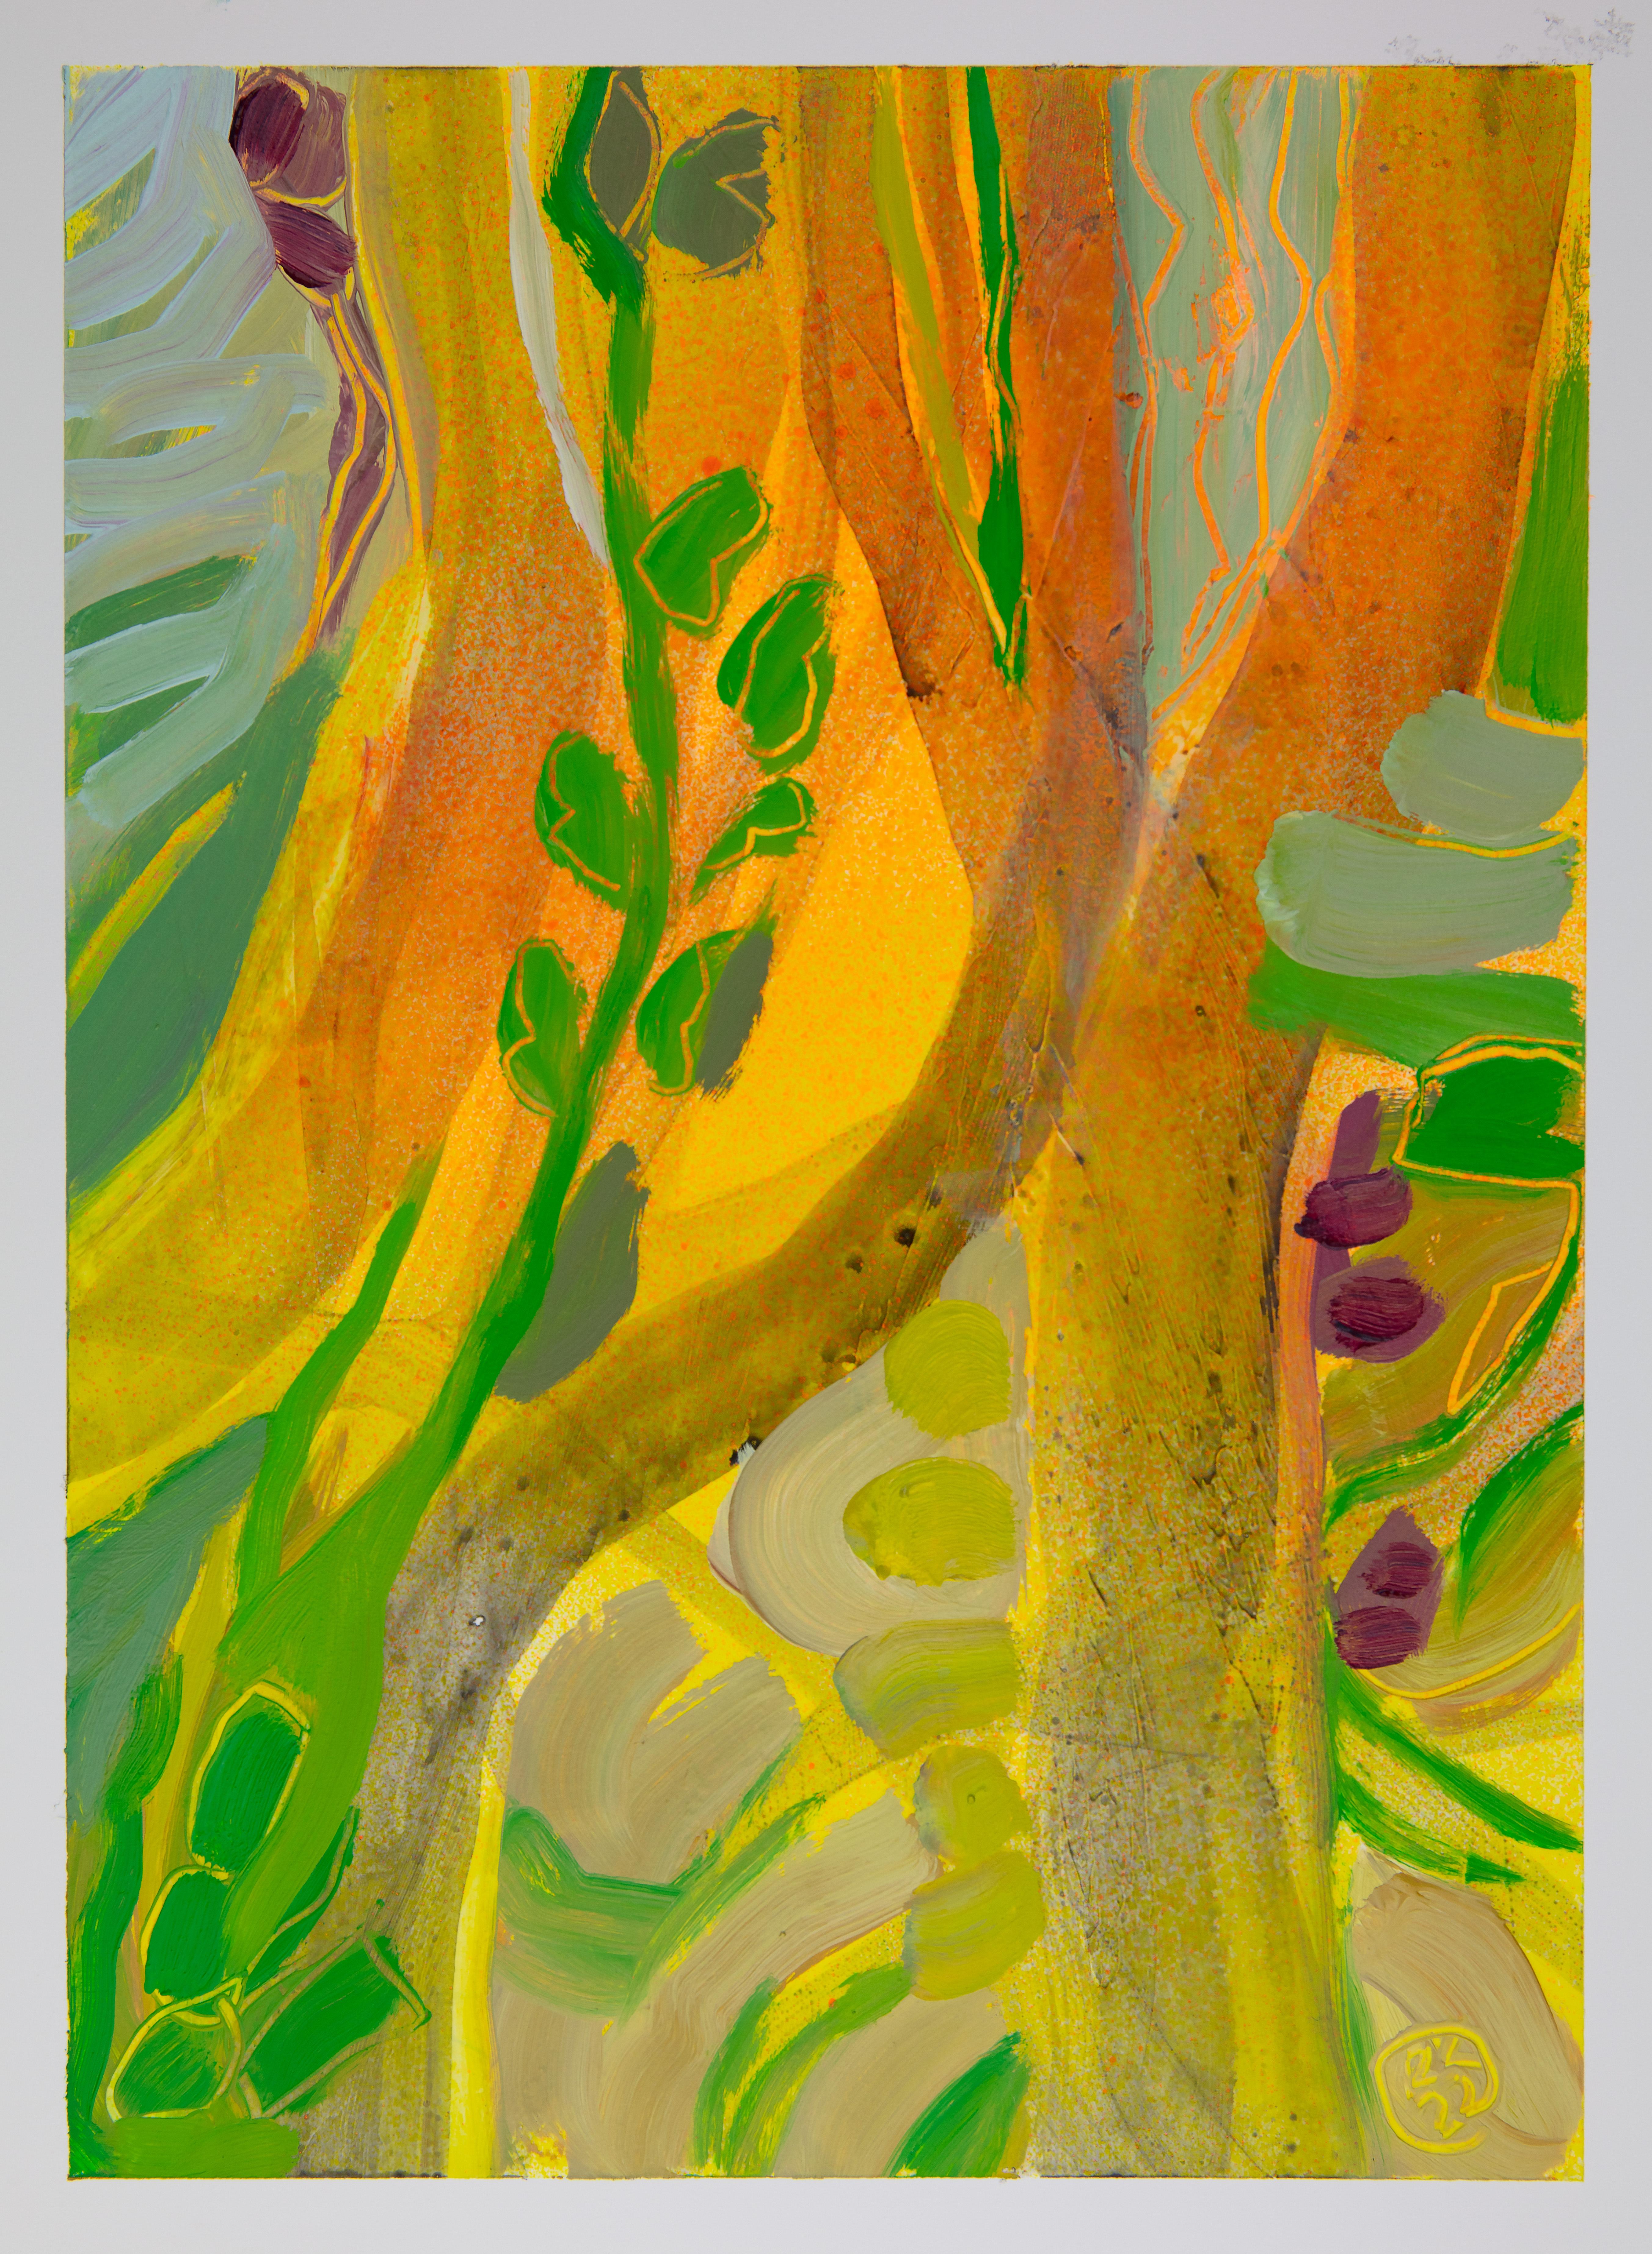 Botanical II, bright green and orange abstract plants, surreal scene